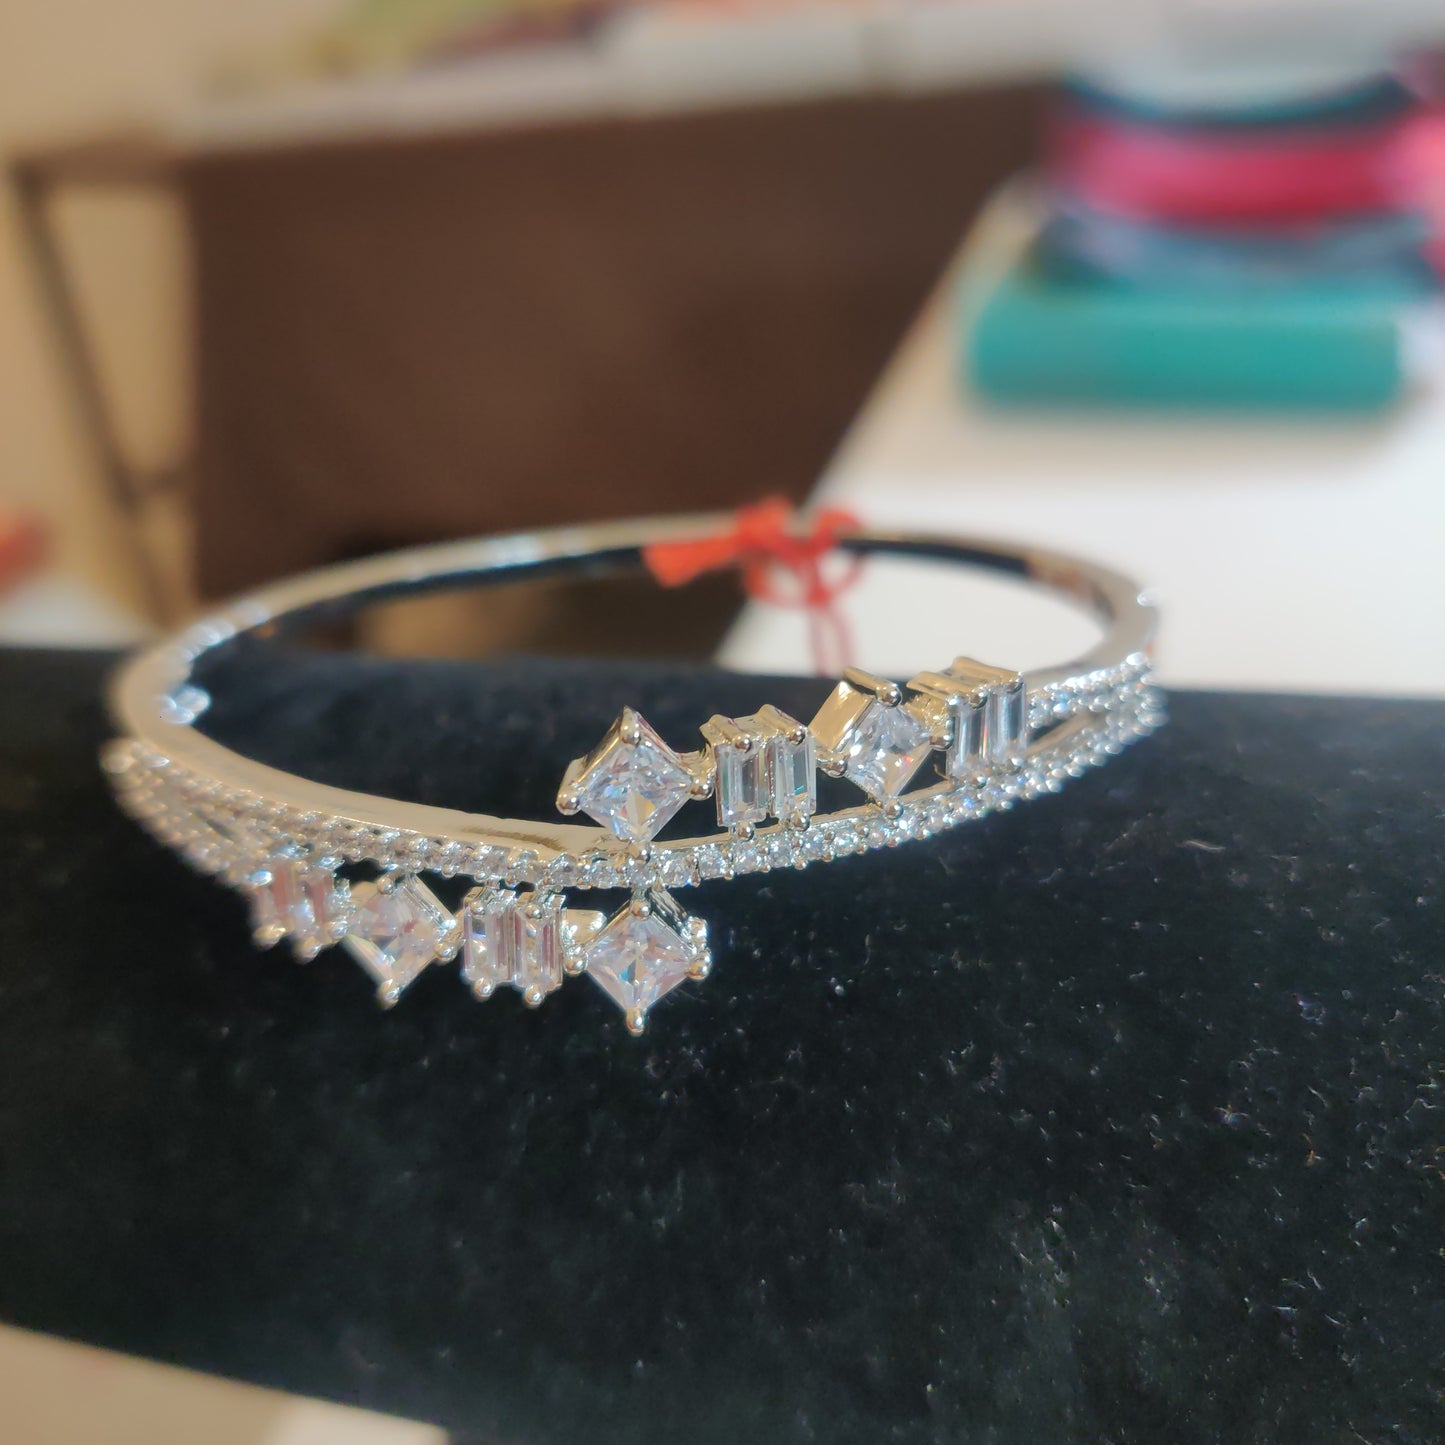 Alluring American Diamond Bracelet With Square Design In Yuma